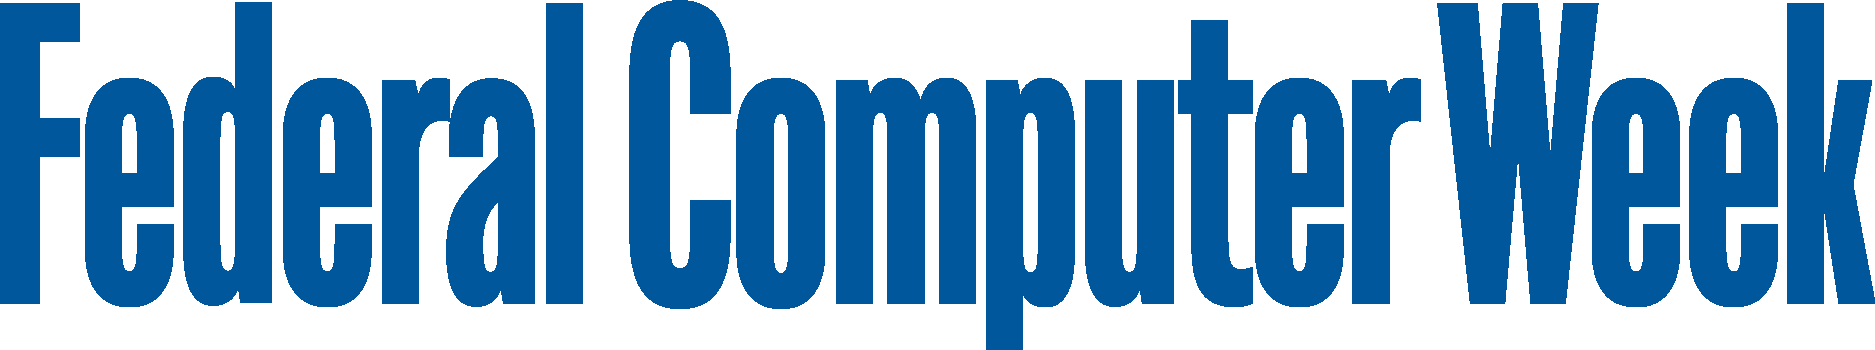 Federal Computer Week Logo Vector